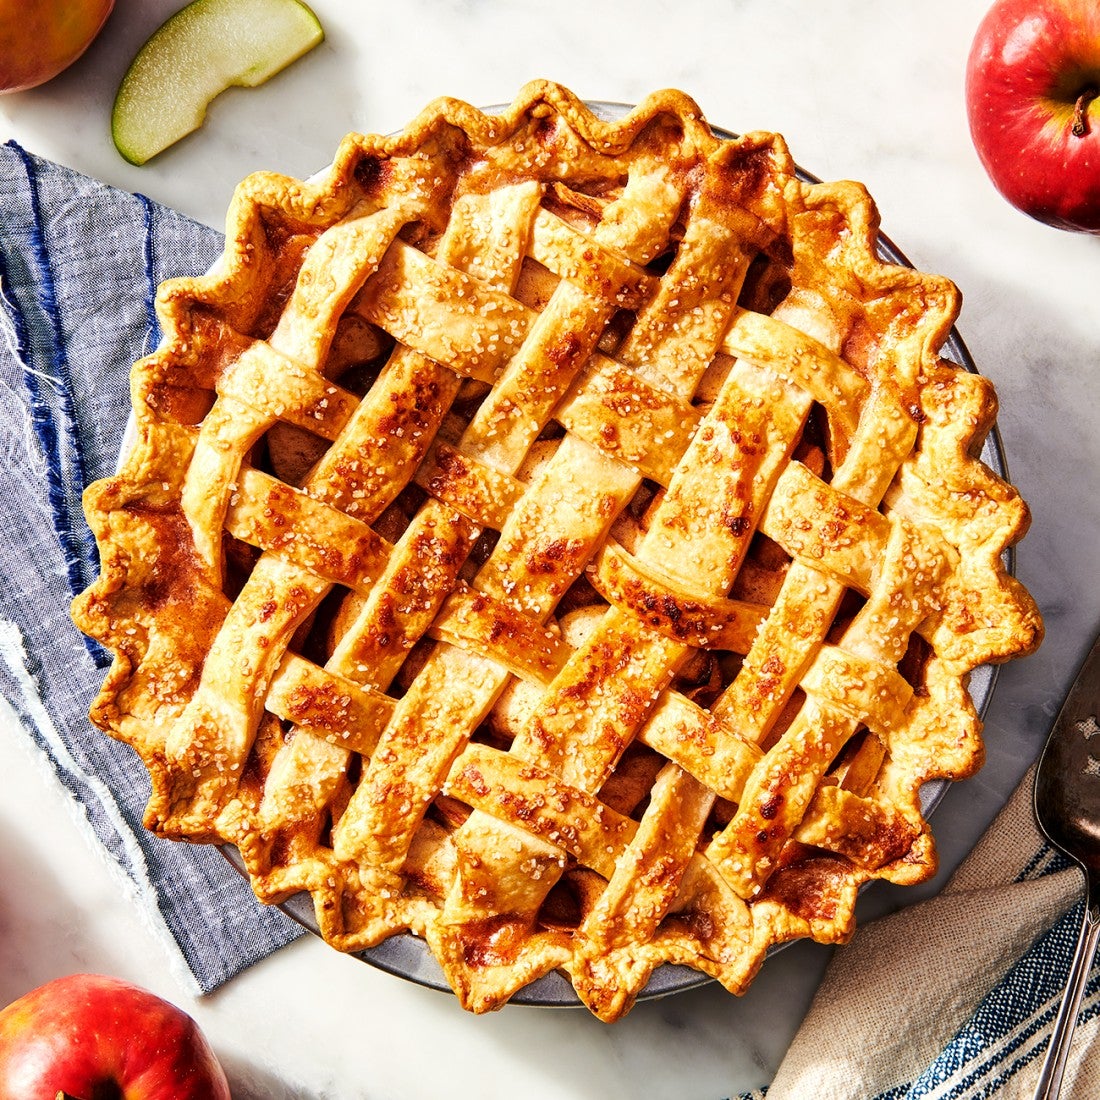 Apple pie with lattice top crust